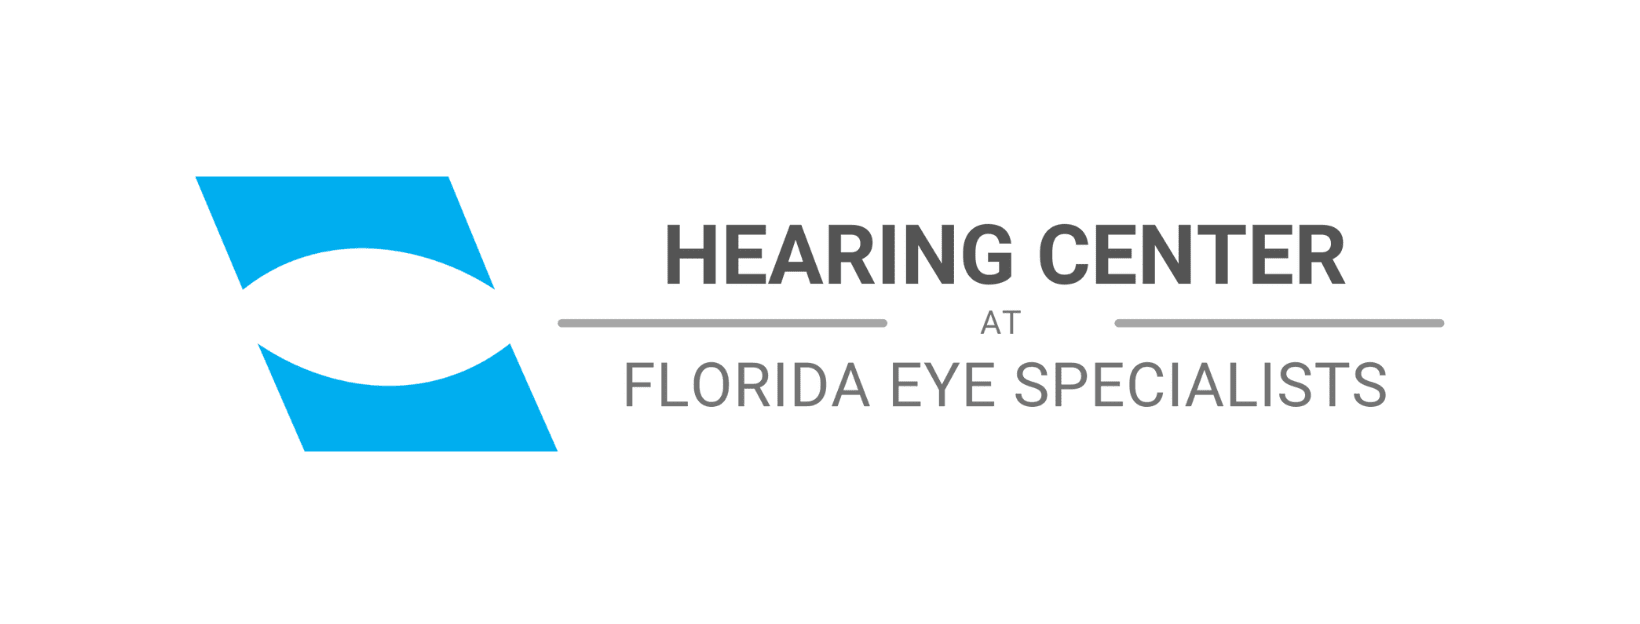 Photo of Florida Eye Specialists Hearing Center Logo